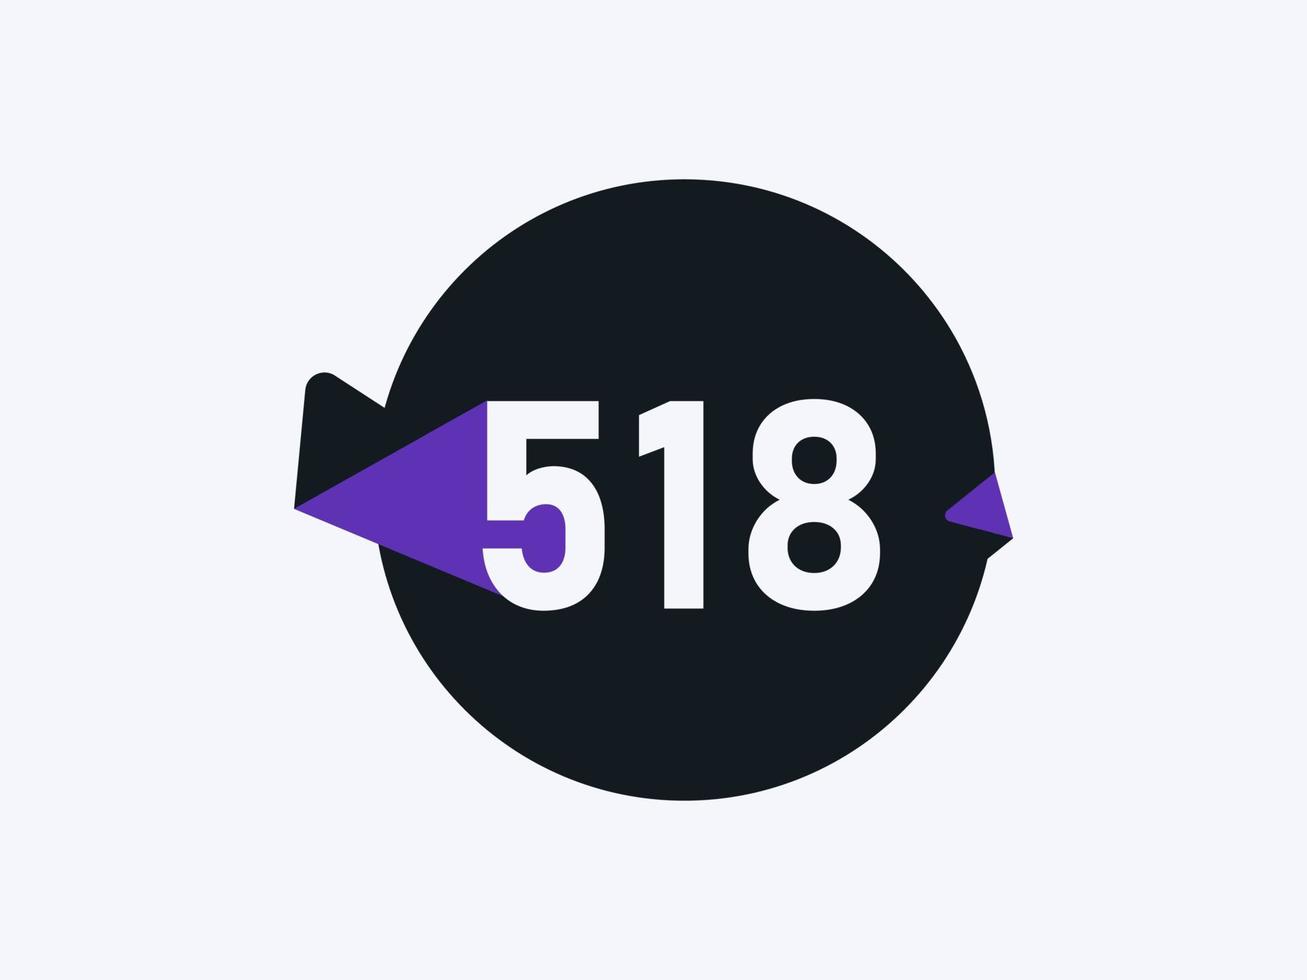 518 Number logo icon design vector image. Number logo icon design vector image